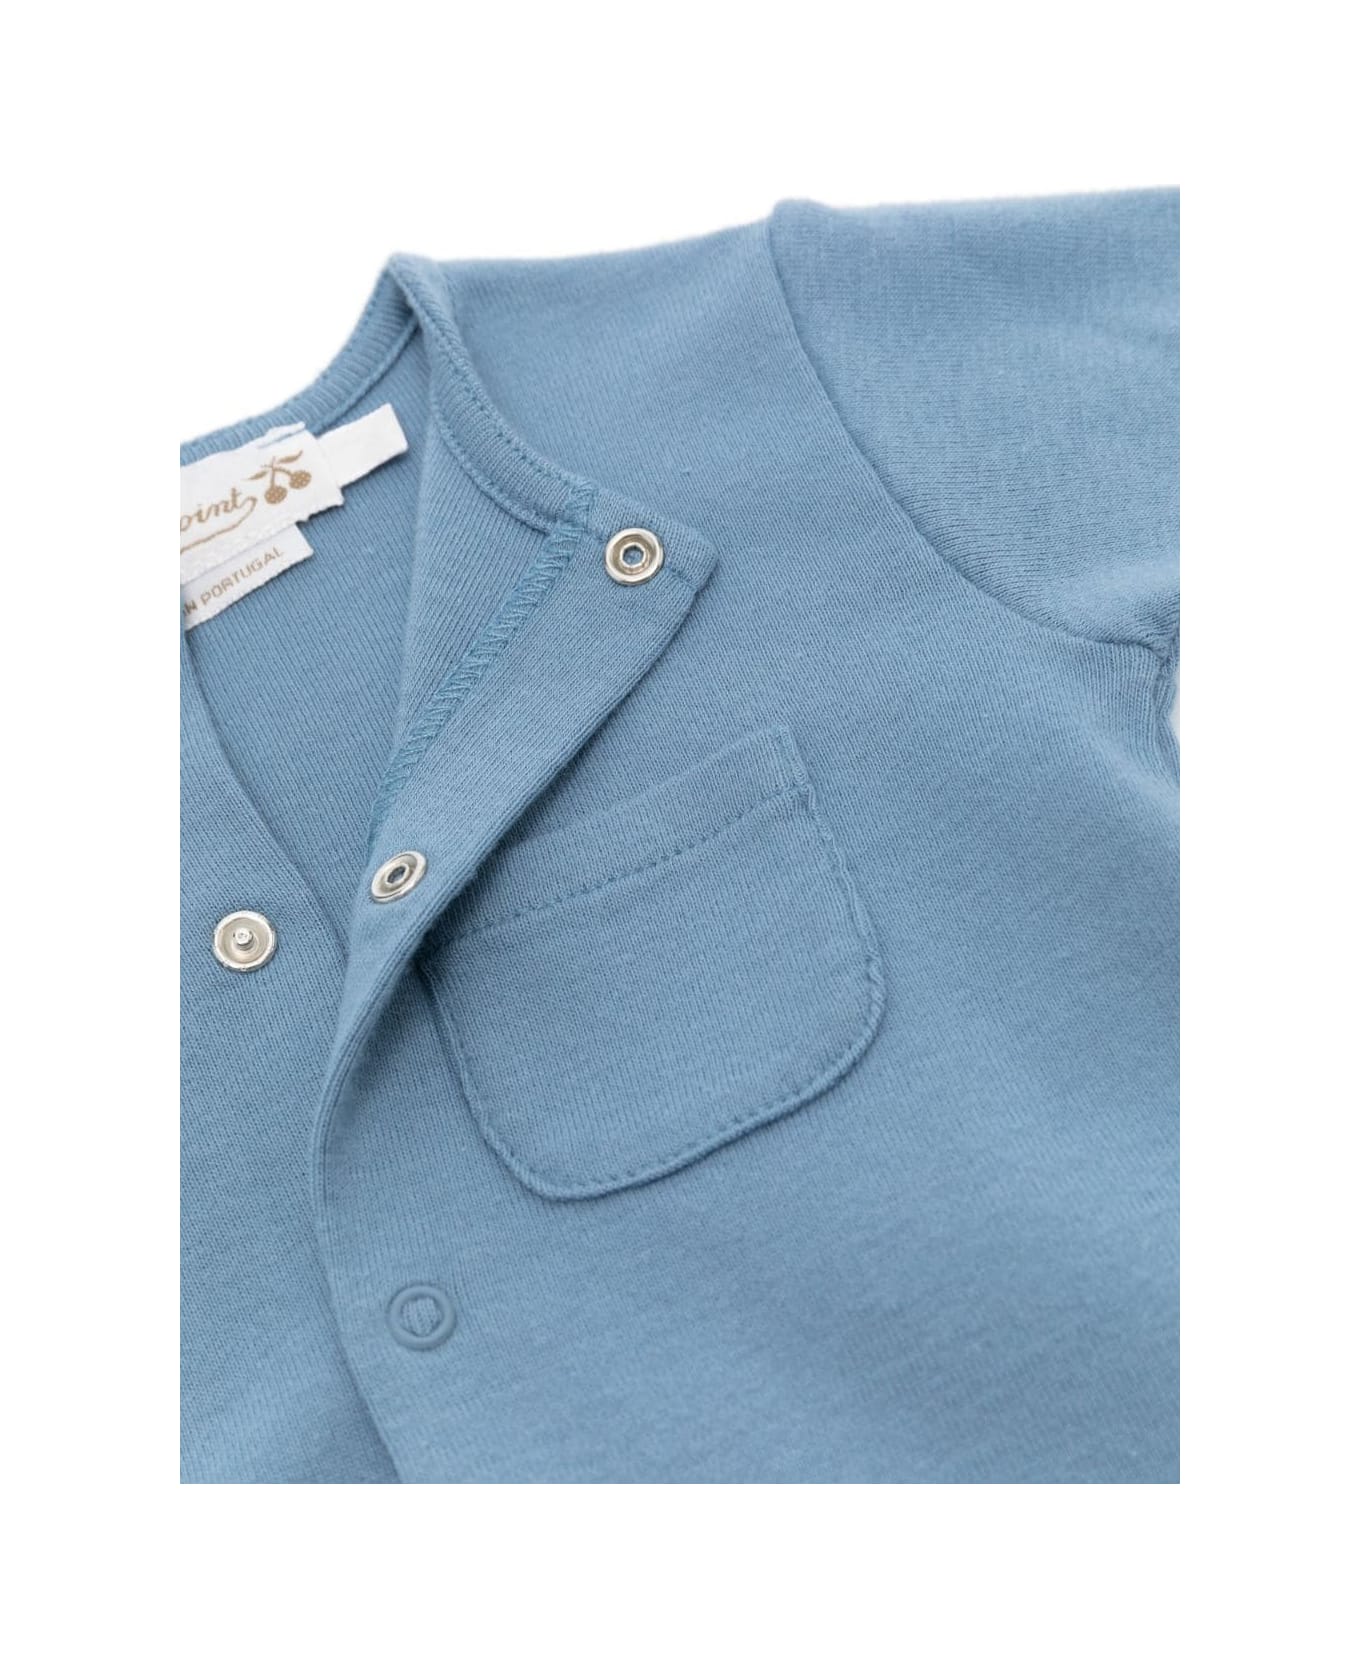 Bonpoint Cosima Pajamas Set In Northern Blue - Blue